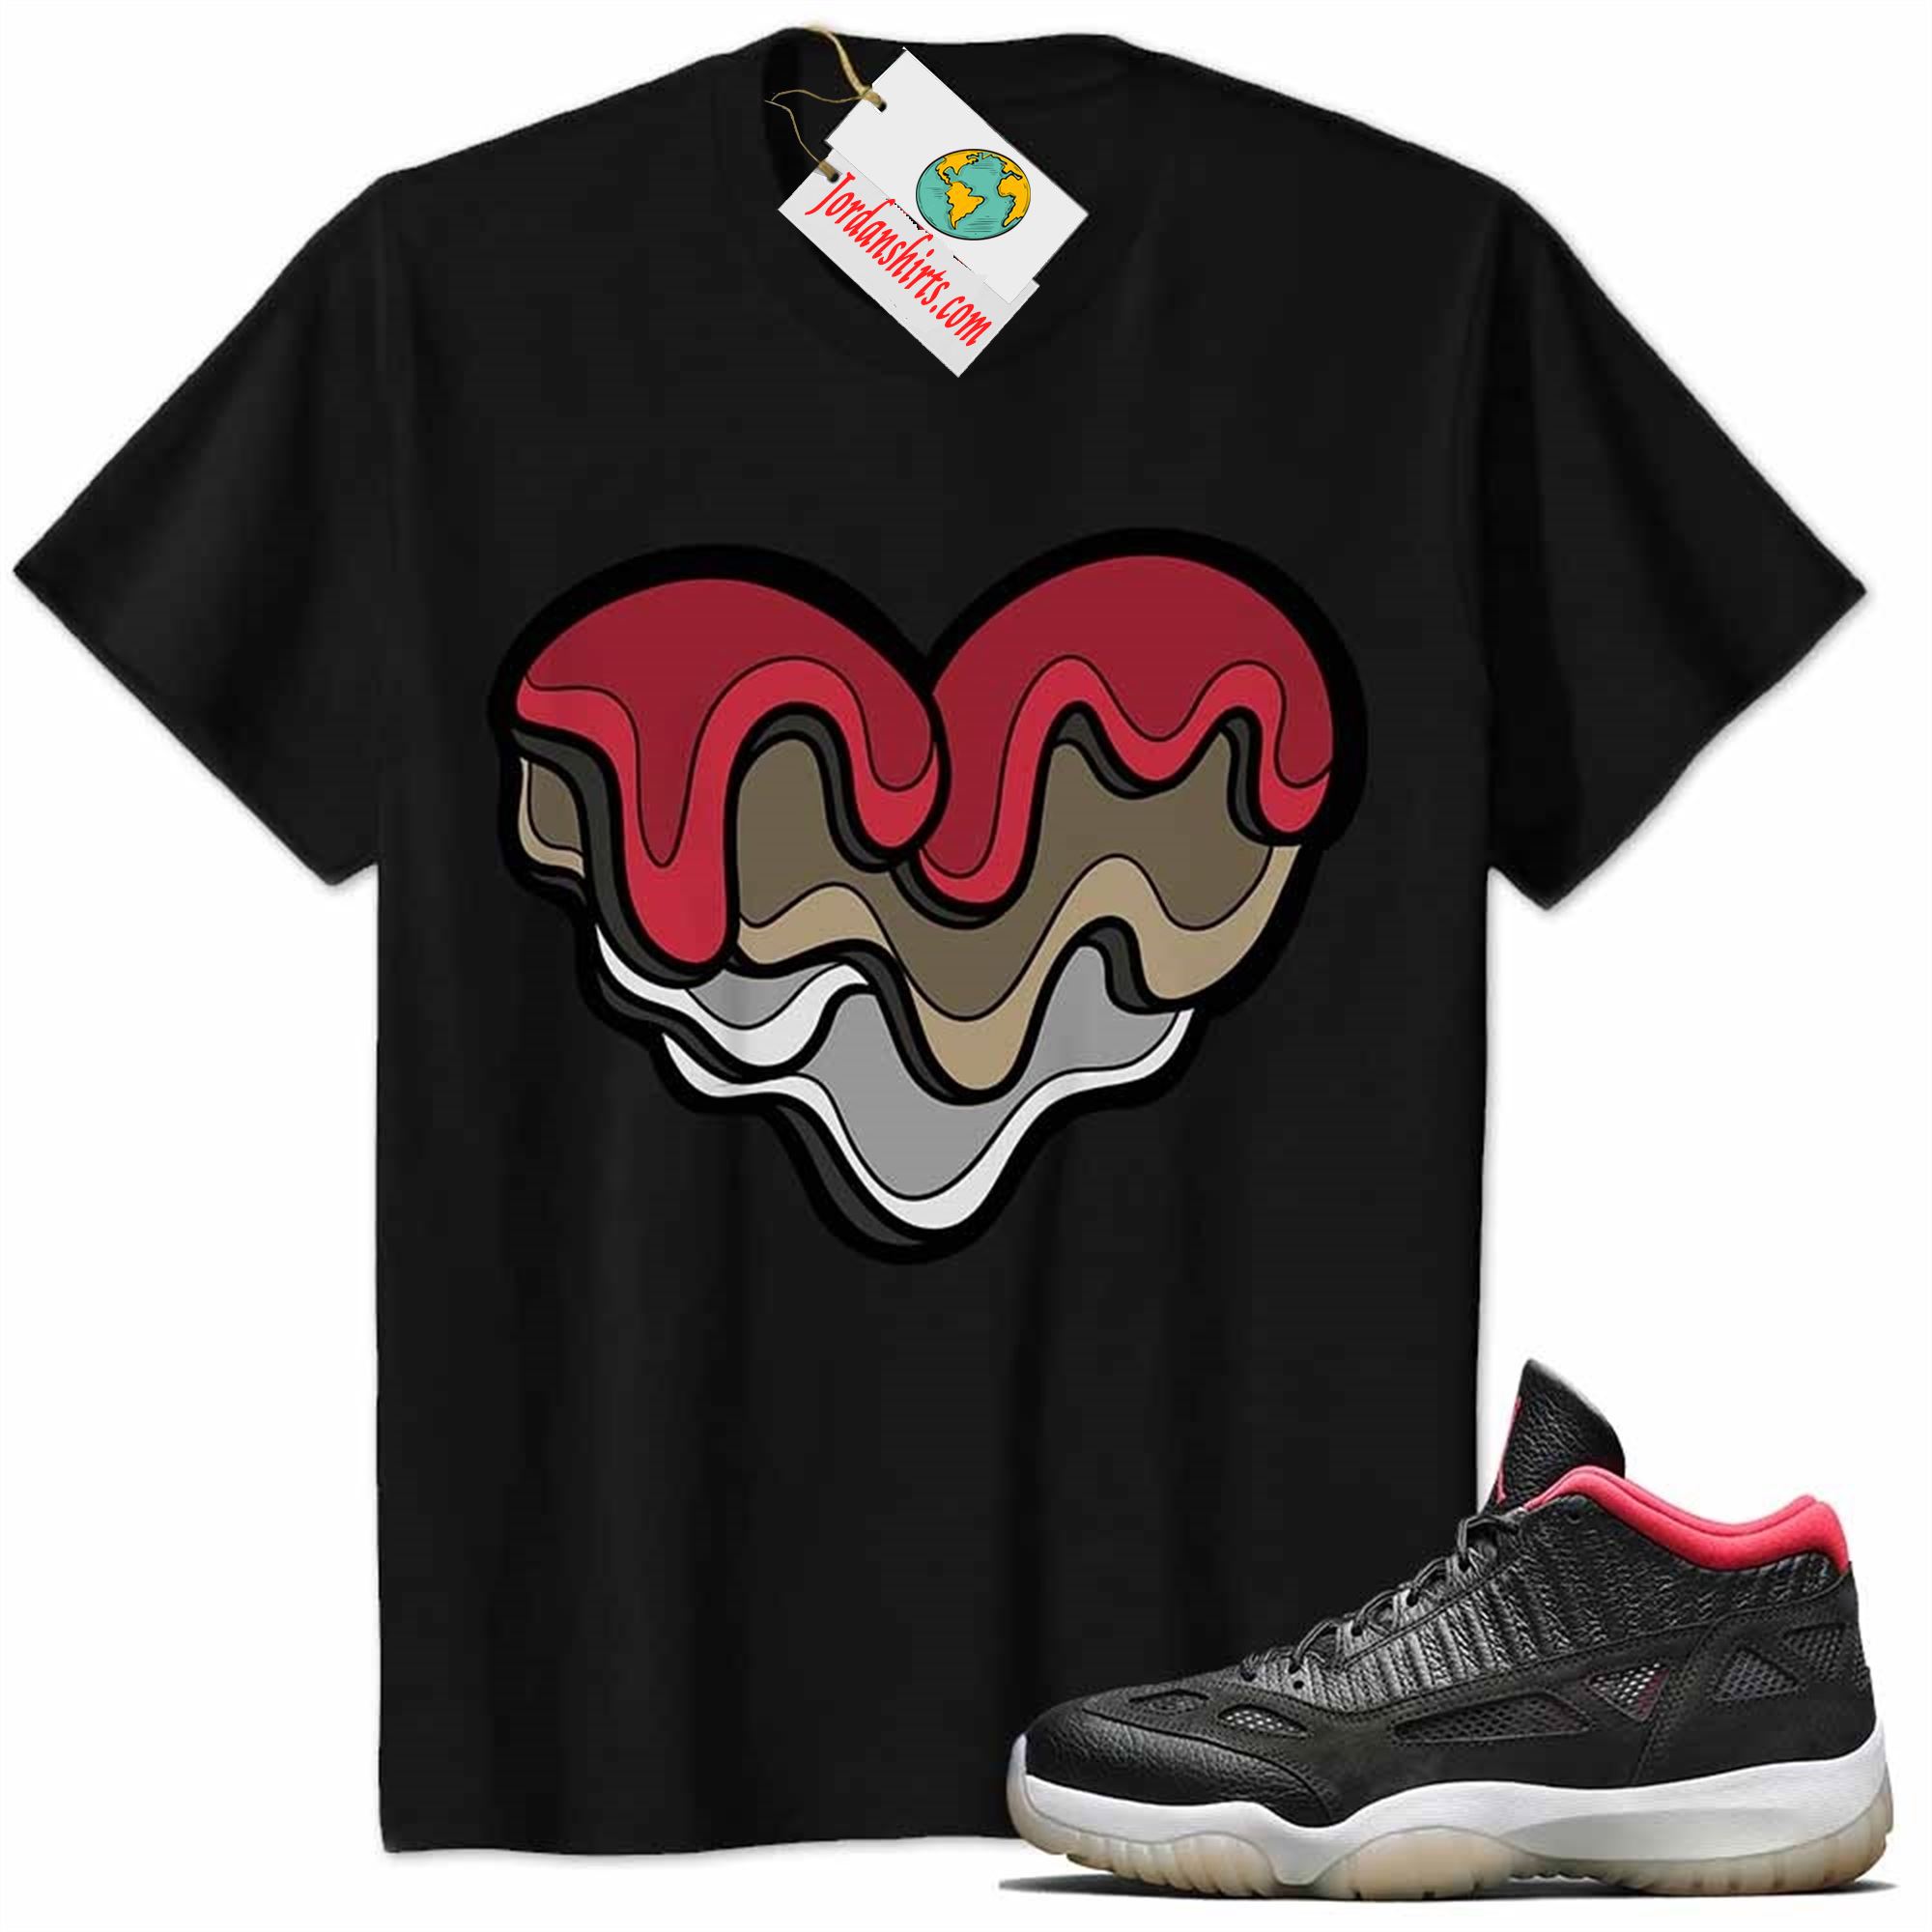 Jordan 11 Shirt, Melt Dripping Heart Black Air Jordan 11 Bred 11s Plus Size Up To 5xl